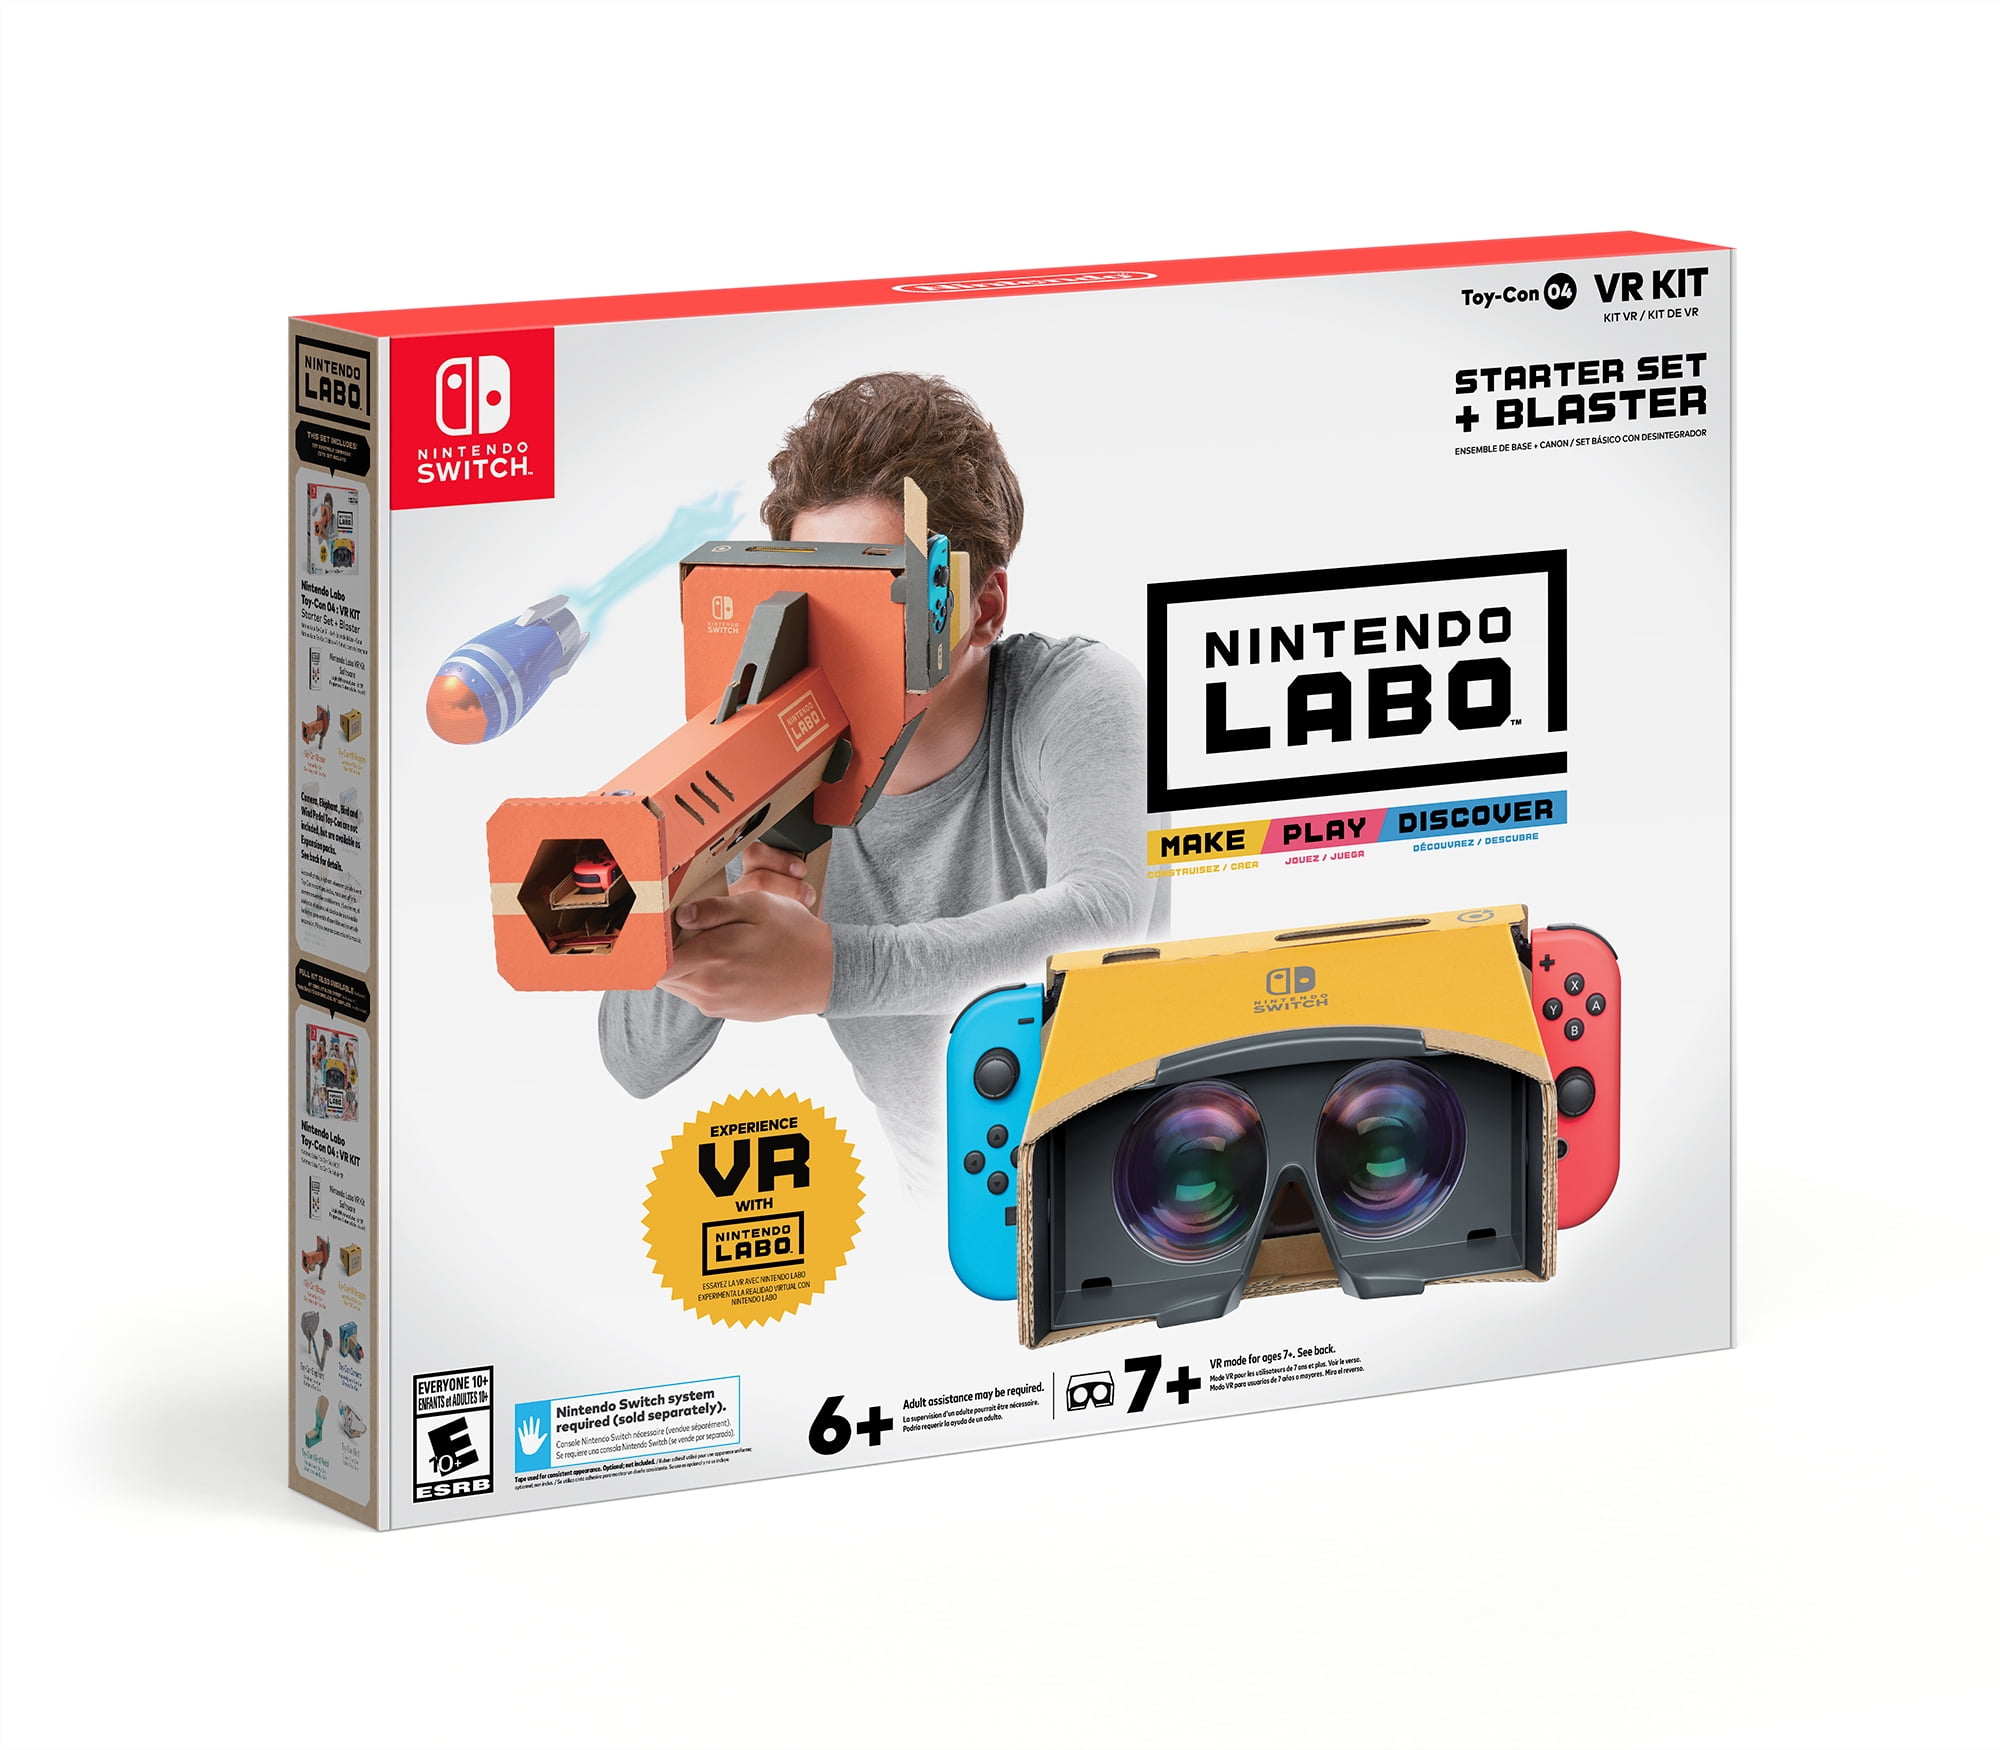 Nintendo Labo Toy-Con 04: VR Kit - Starter Set + Blaster 